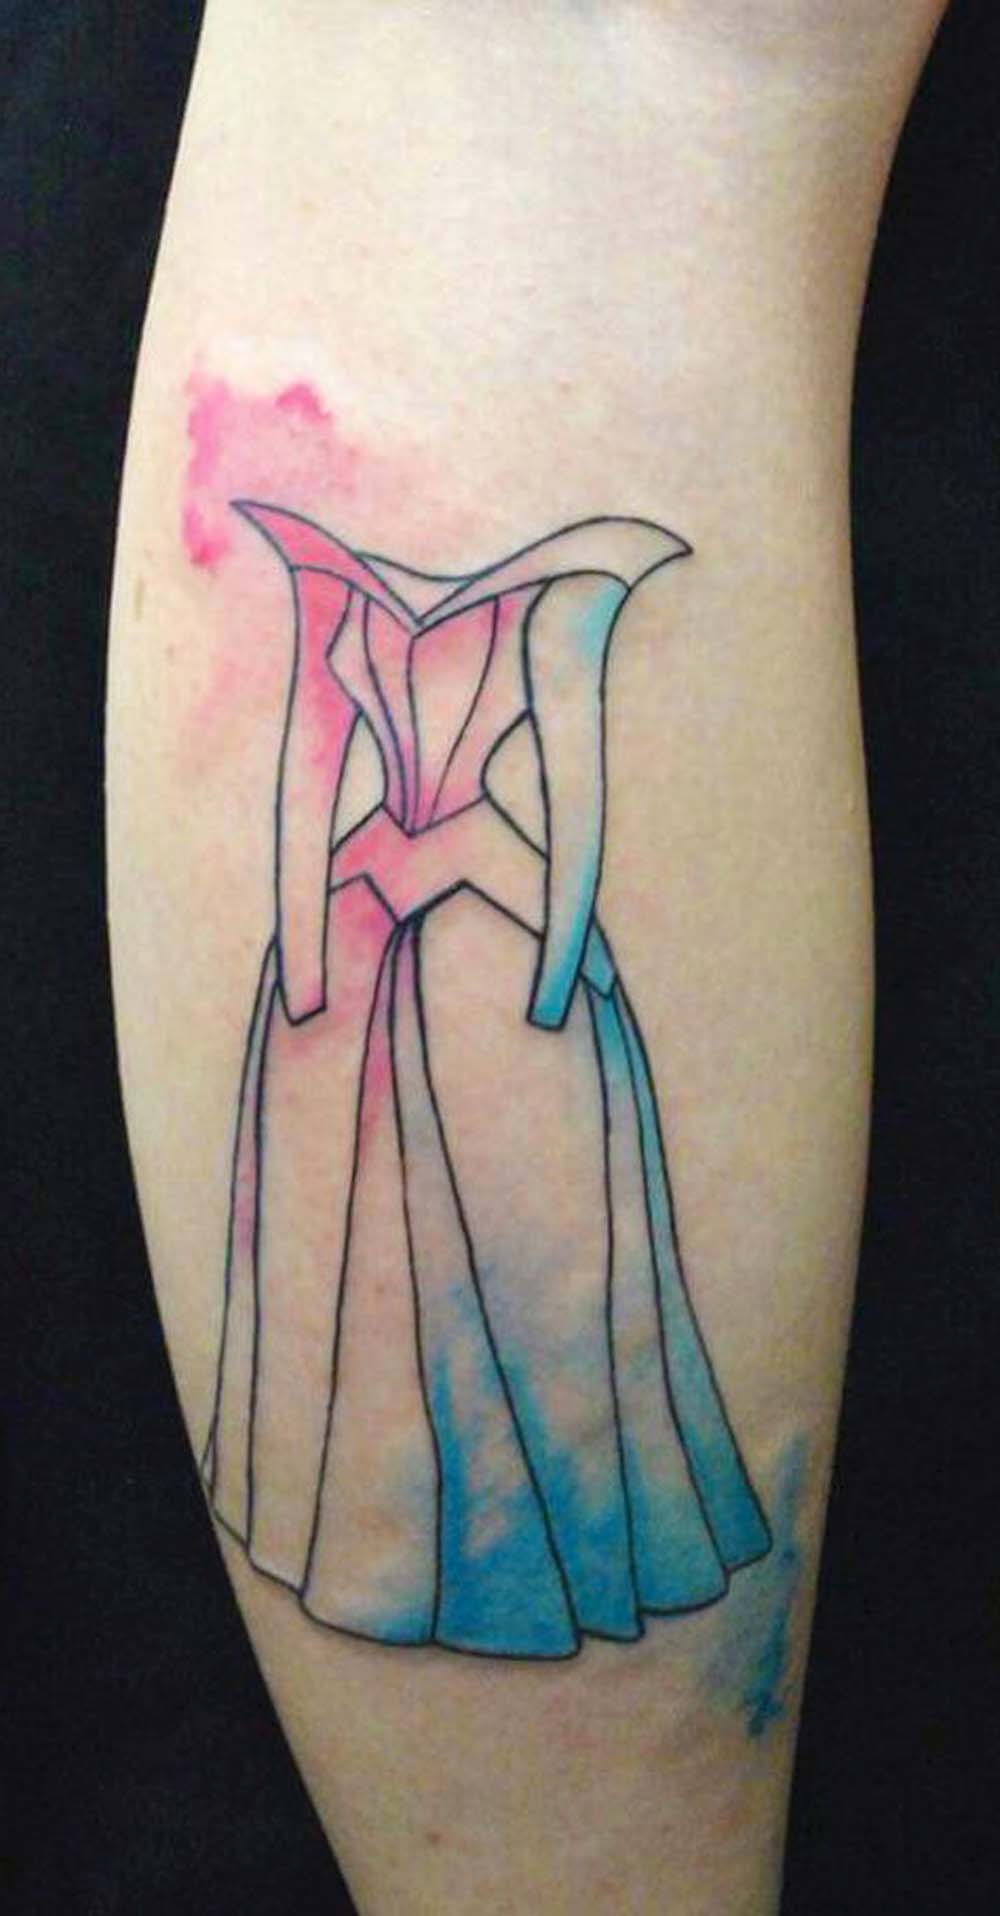 Aurora Dress Watercolor Calf Leg Tattoo Ideas for Women - ideas del tatuaje de la pantorrilla - www.MyBodiArt.com 